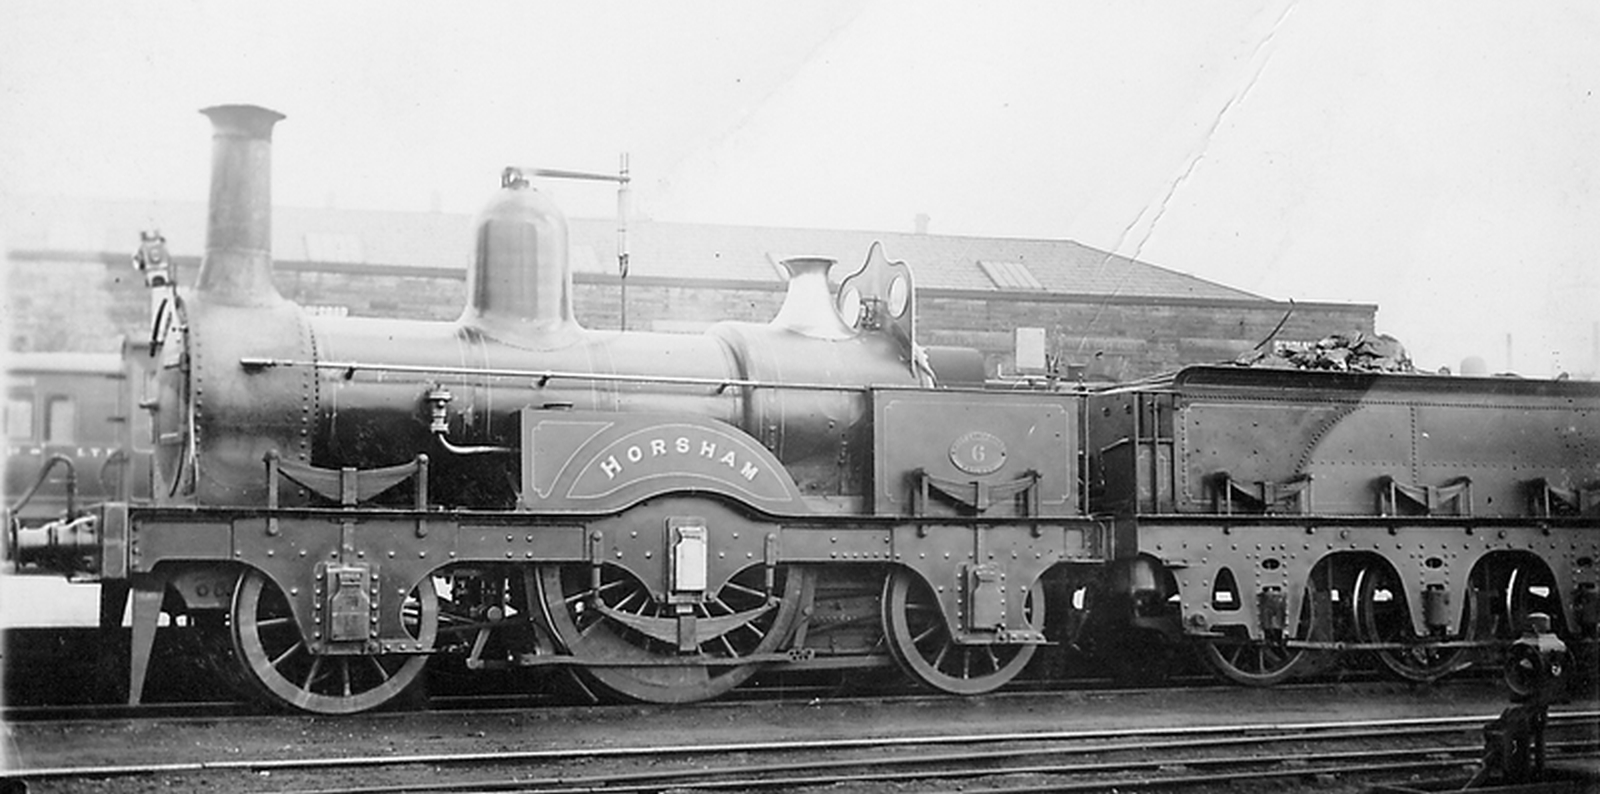 Former No. 233 “Horsham” as No. 6 of the West Lancashire Railway